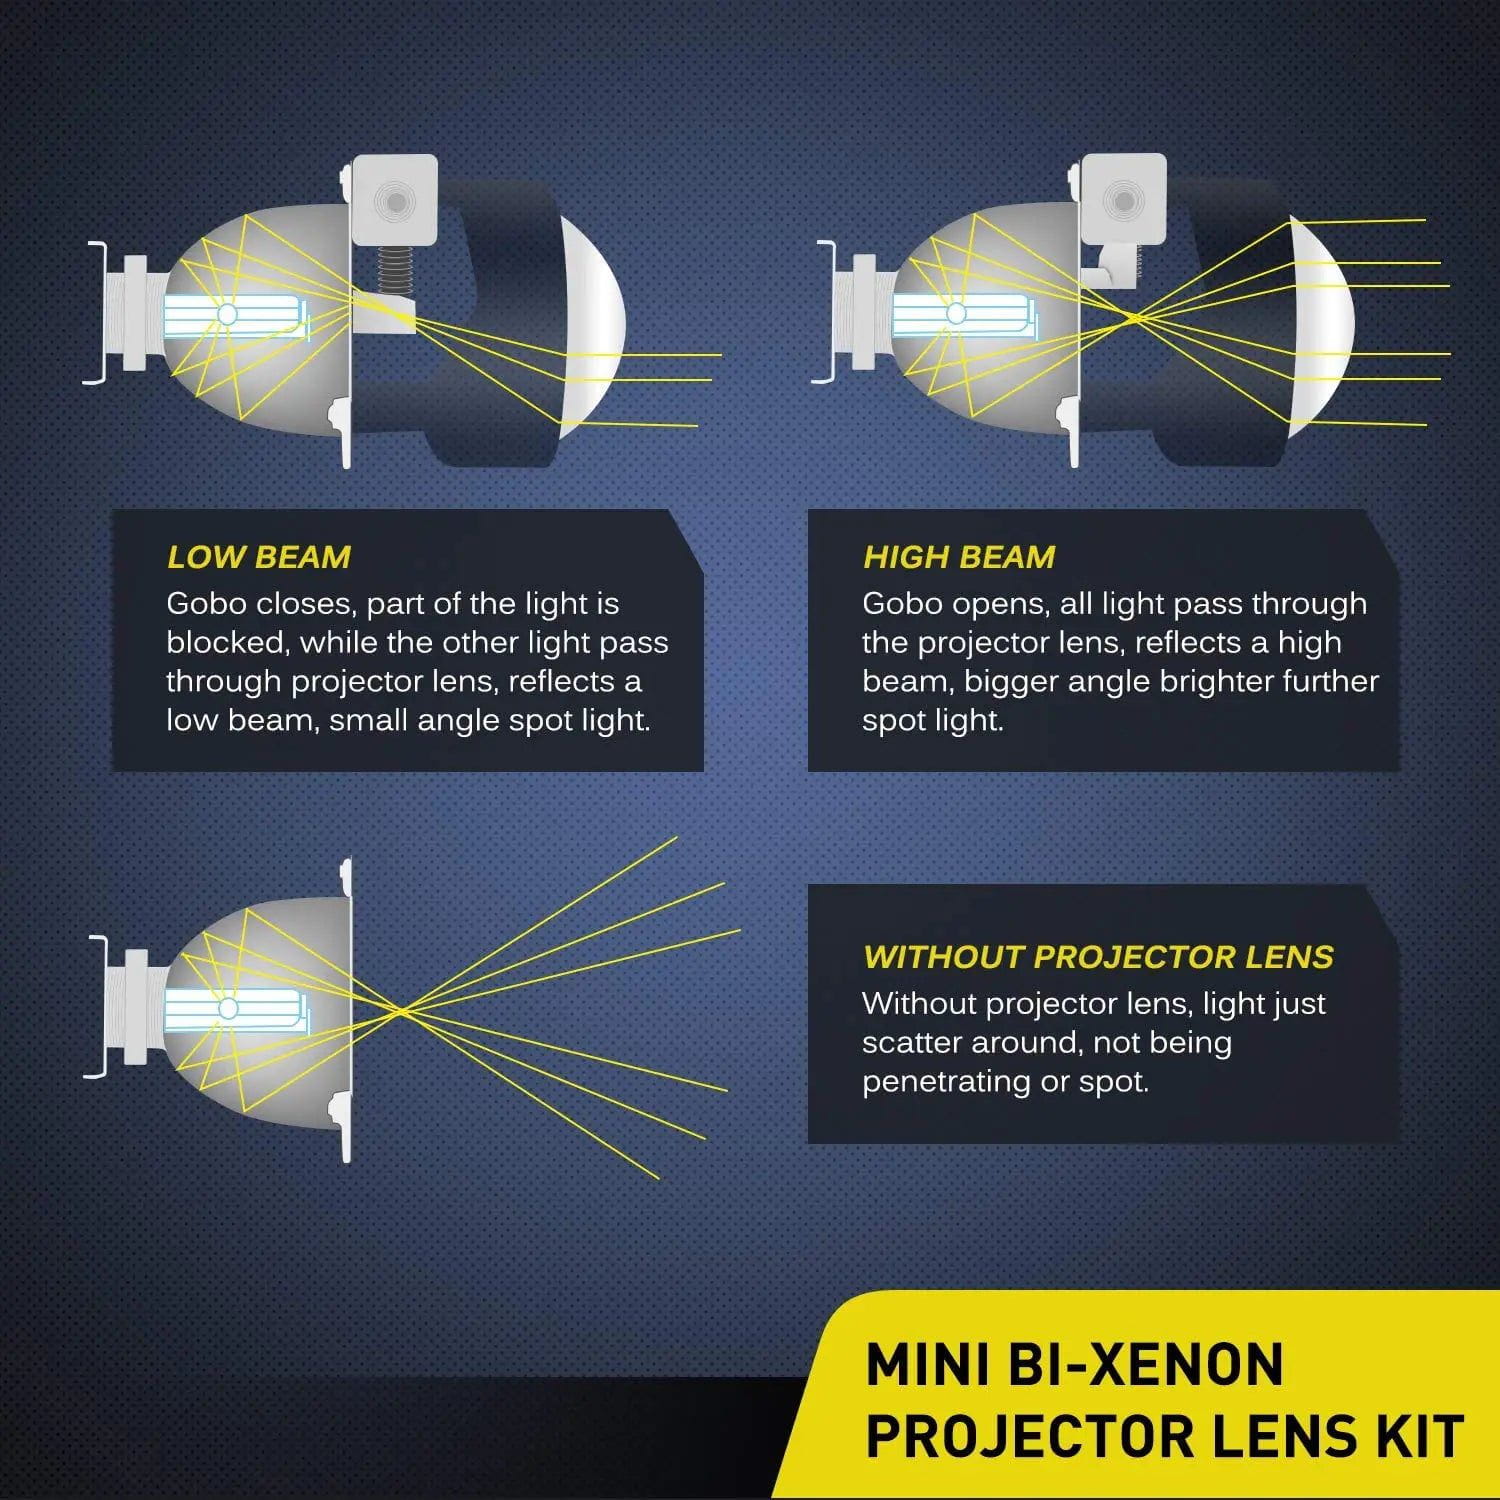 LED Headlight 2.5" Mini Projector Lens for H1 Bulb Headlights Retrofit (Pair)